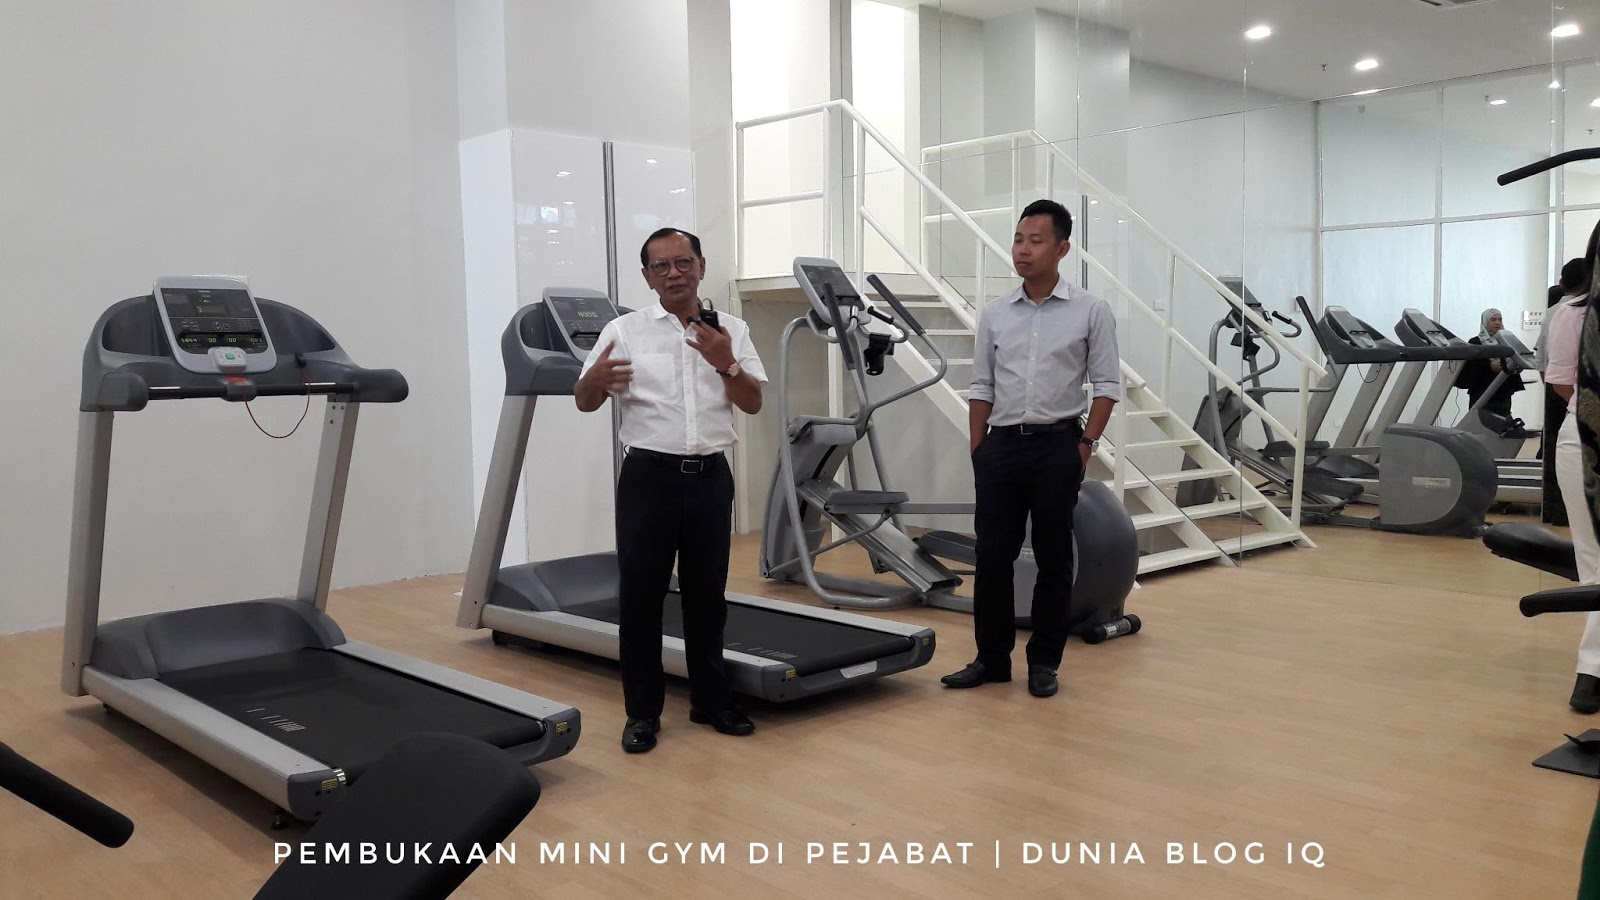 Pembukaan Mini Gym Di Pejabat